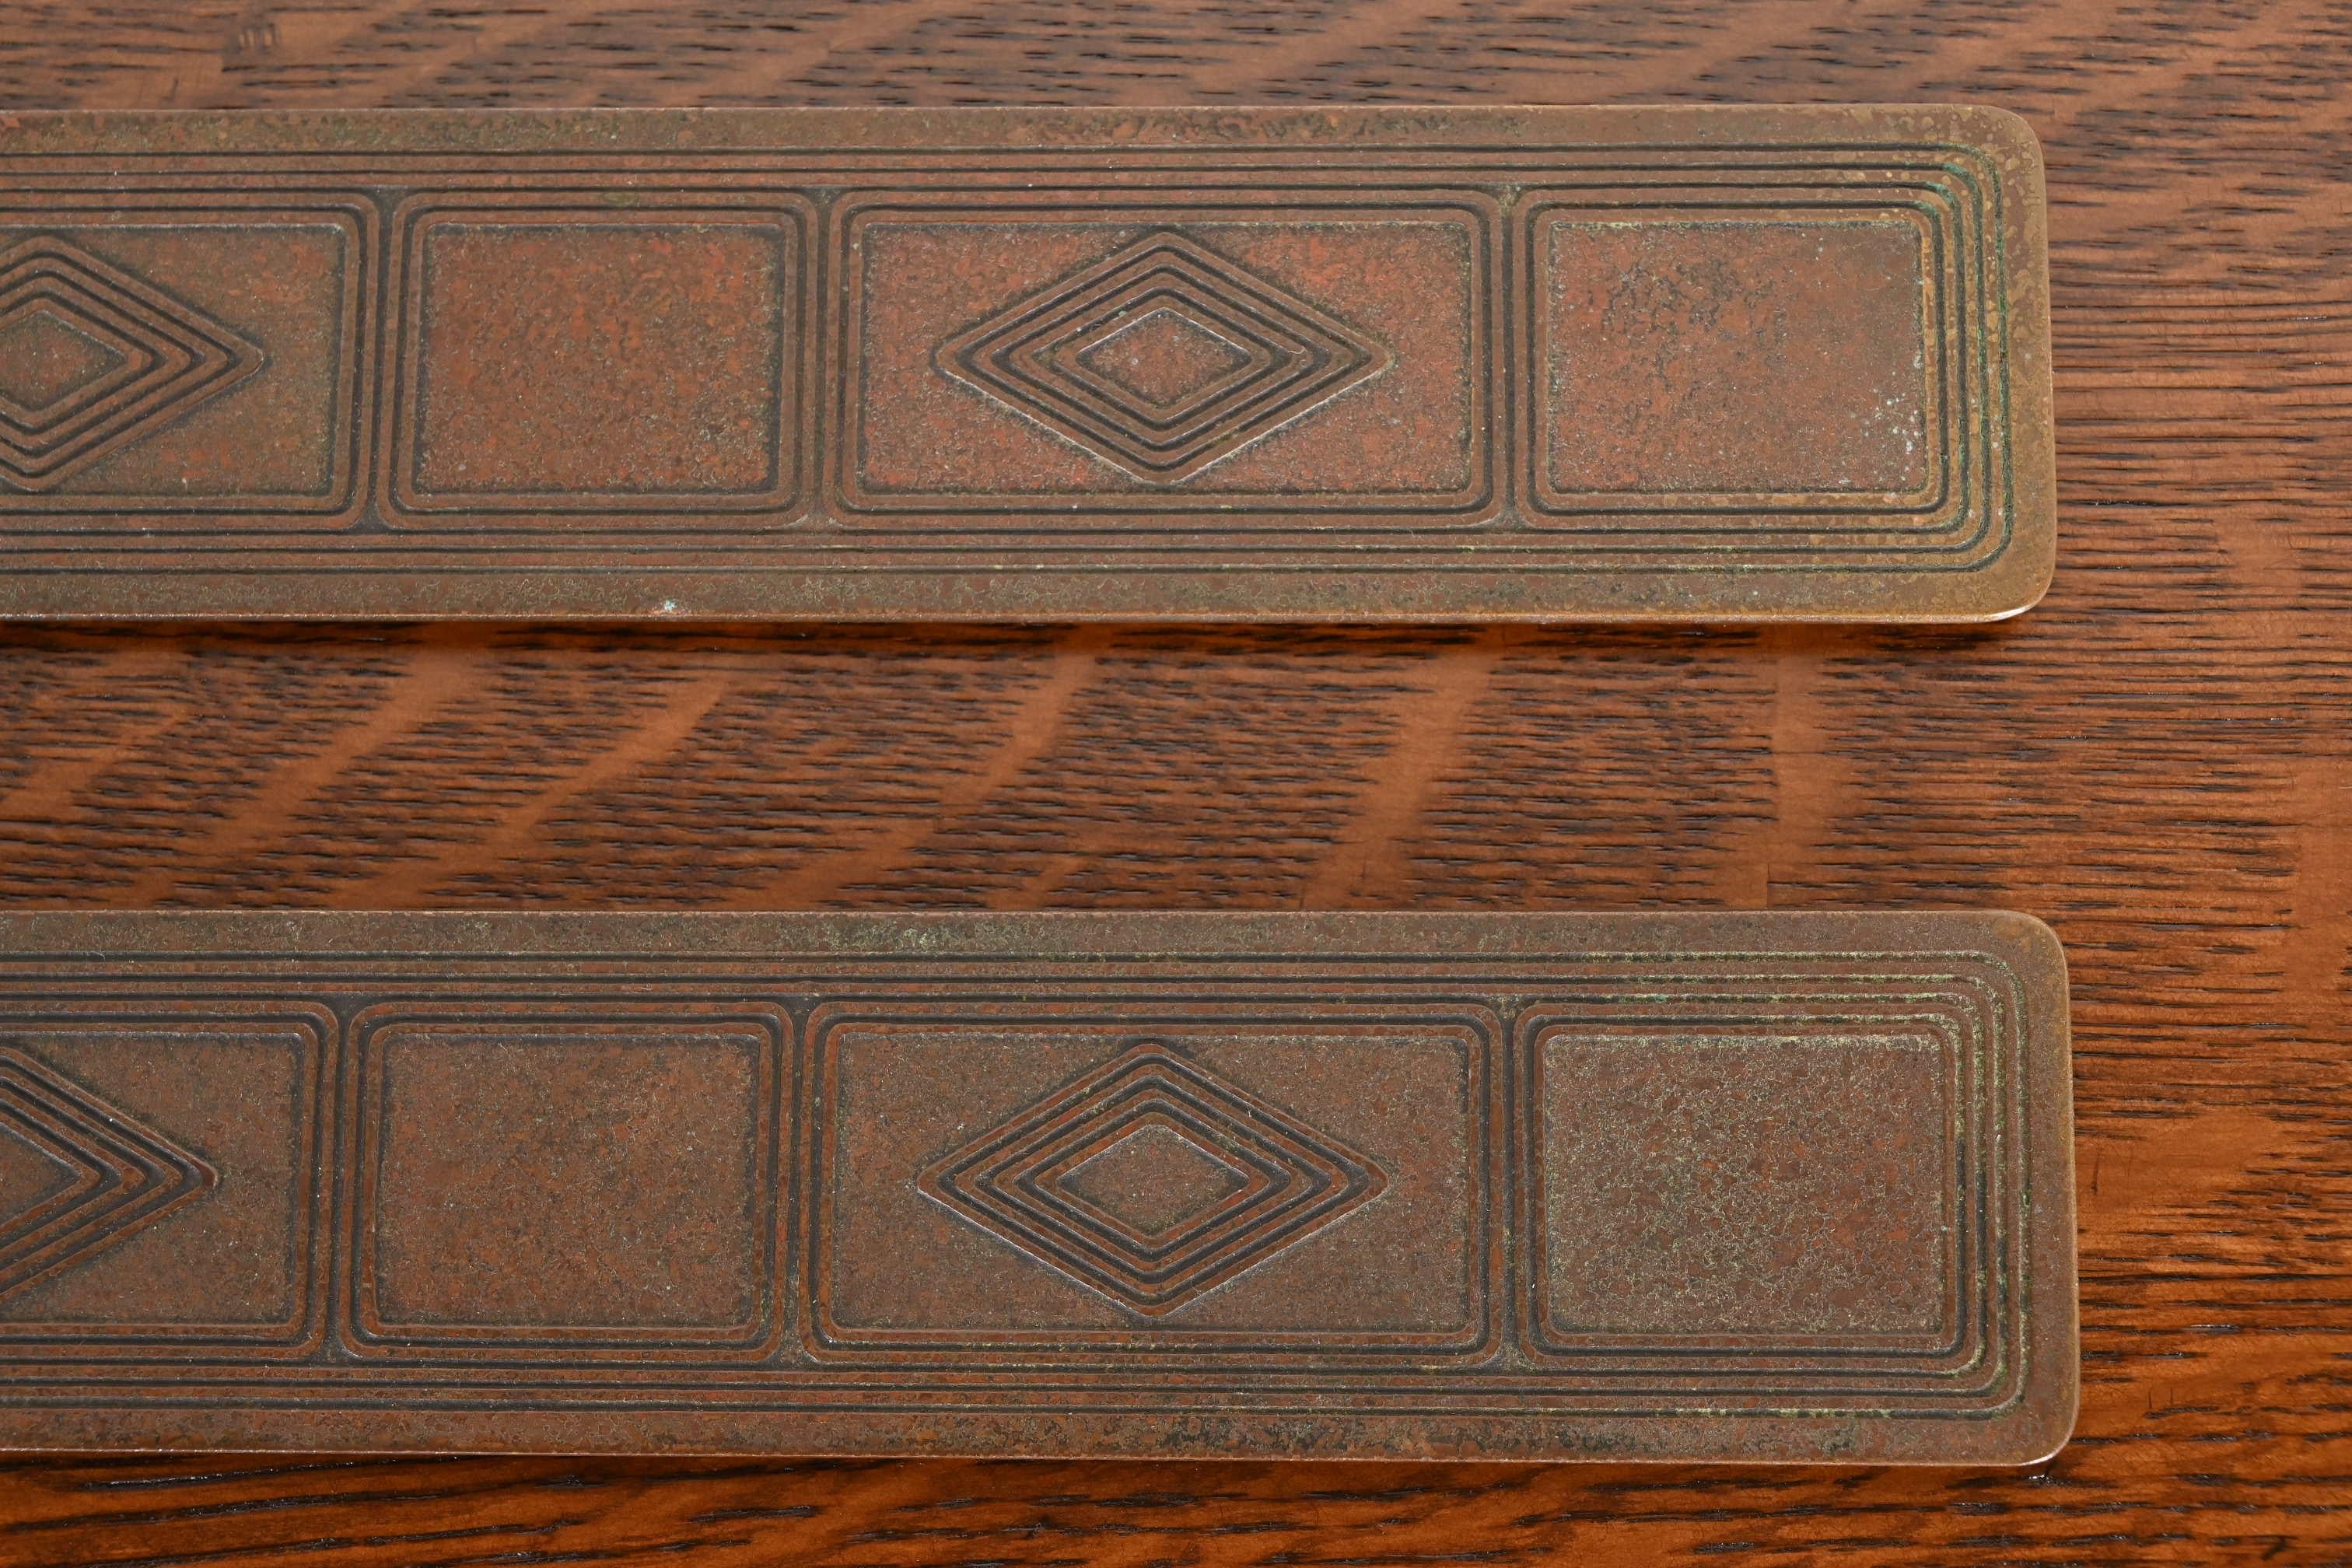 Tiffany Studios Graduate Pattern Bronze Blotter Ends With Leather Desk Blotter For Sale 3